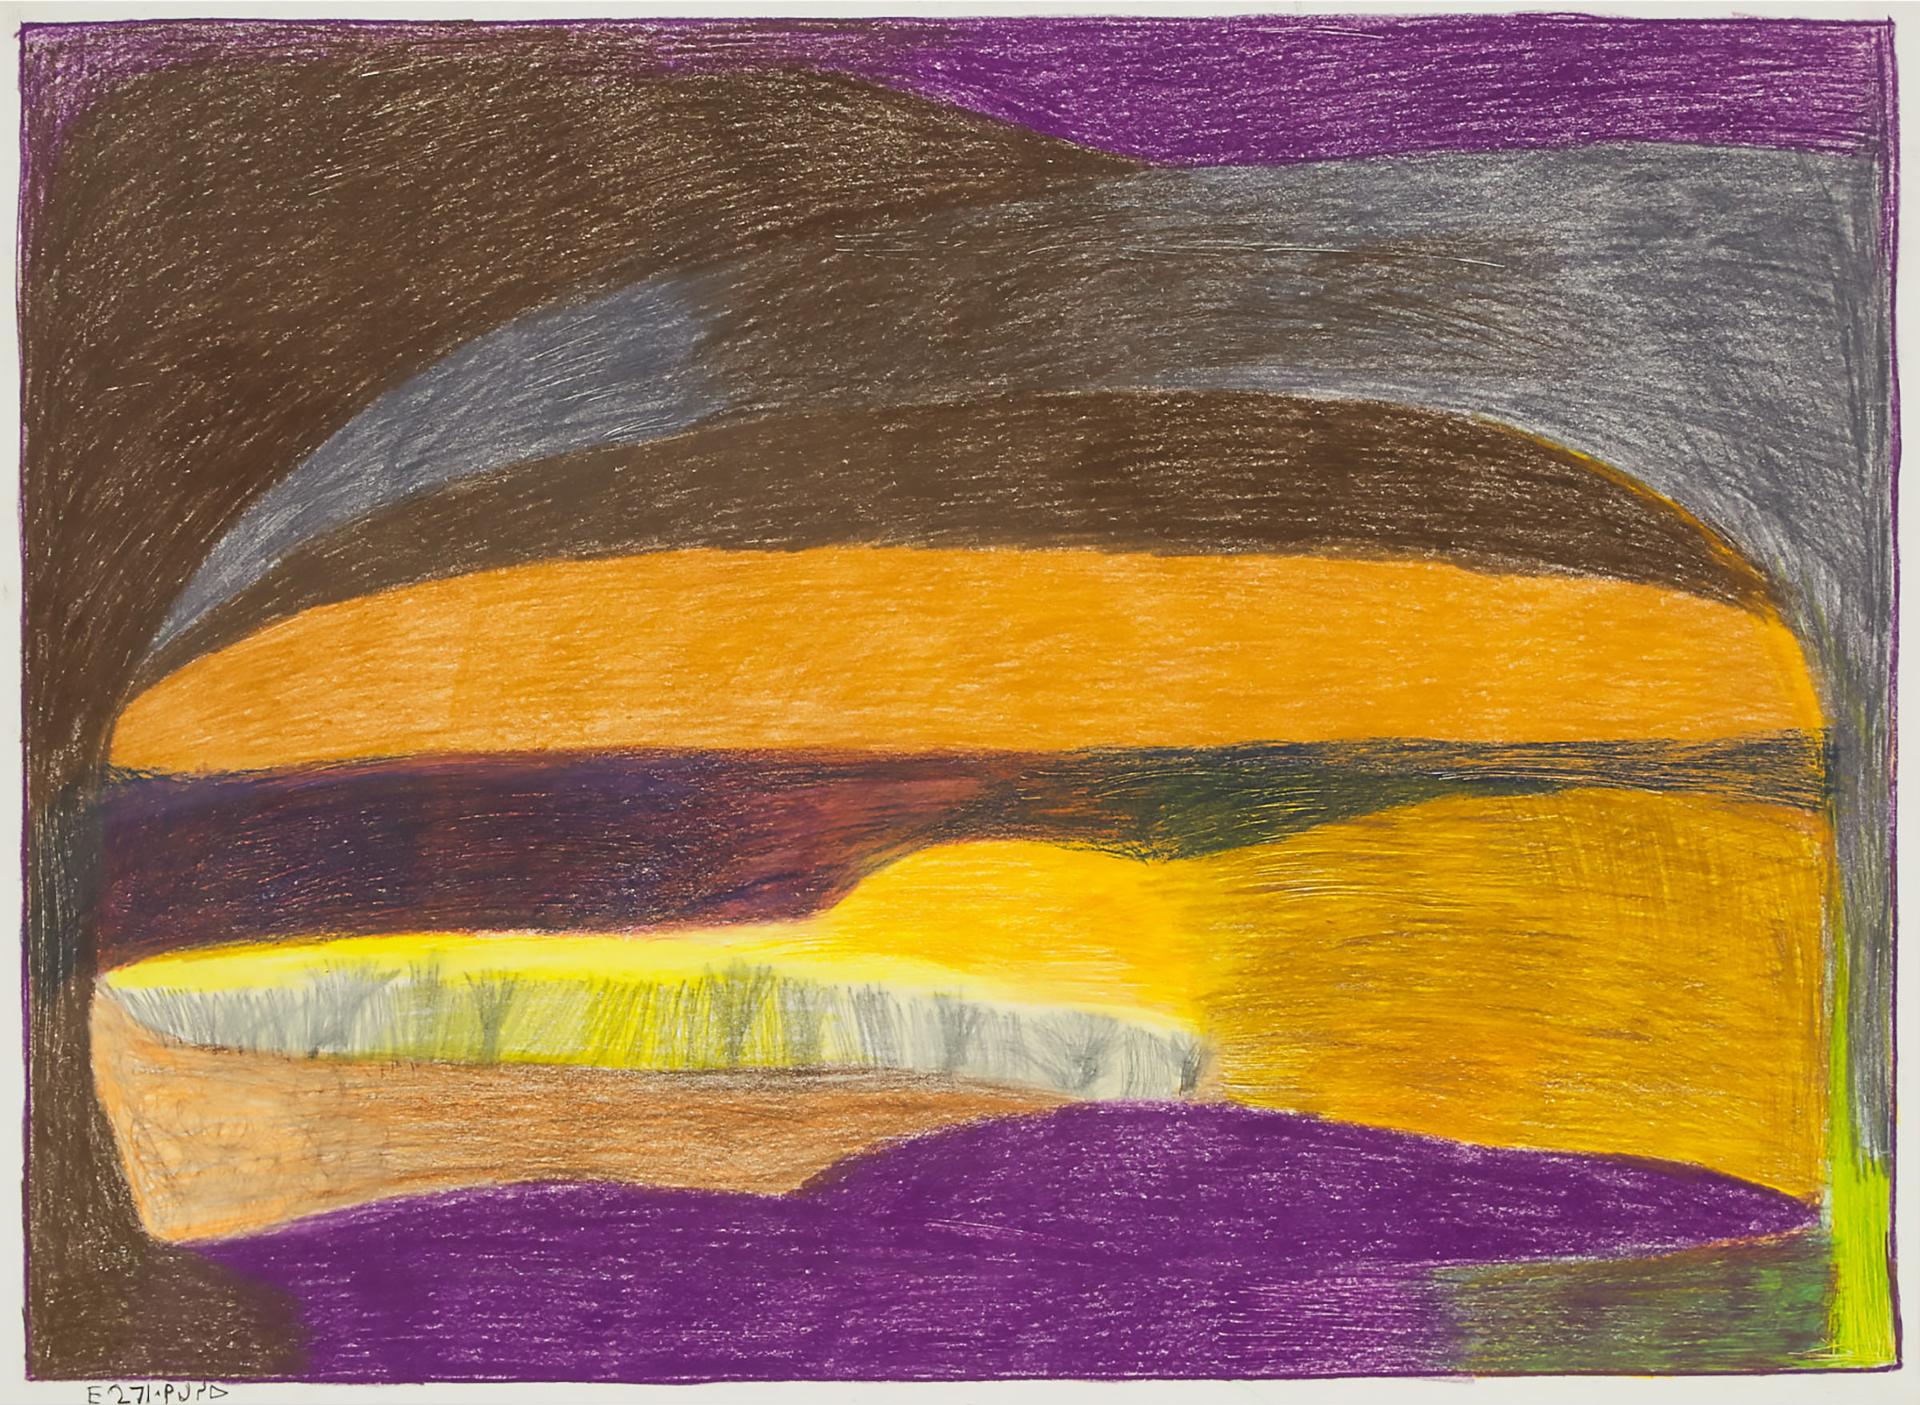 Janet Kigusiuq (1926-2005) - Untitled (Landscape)